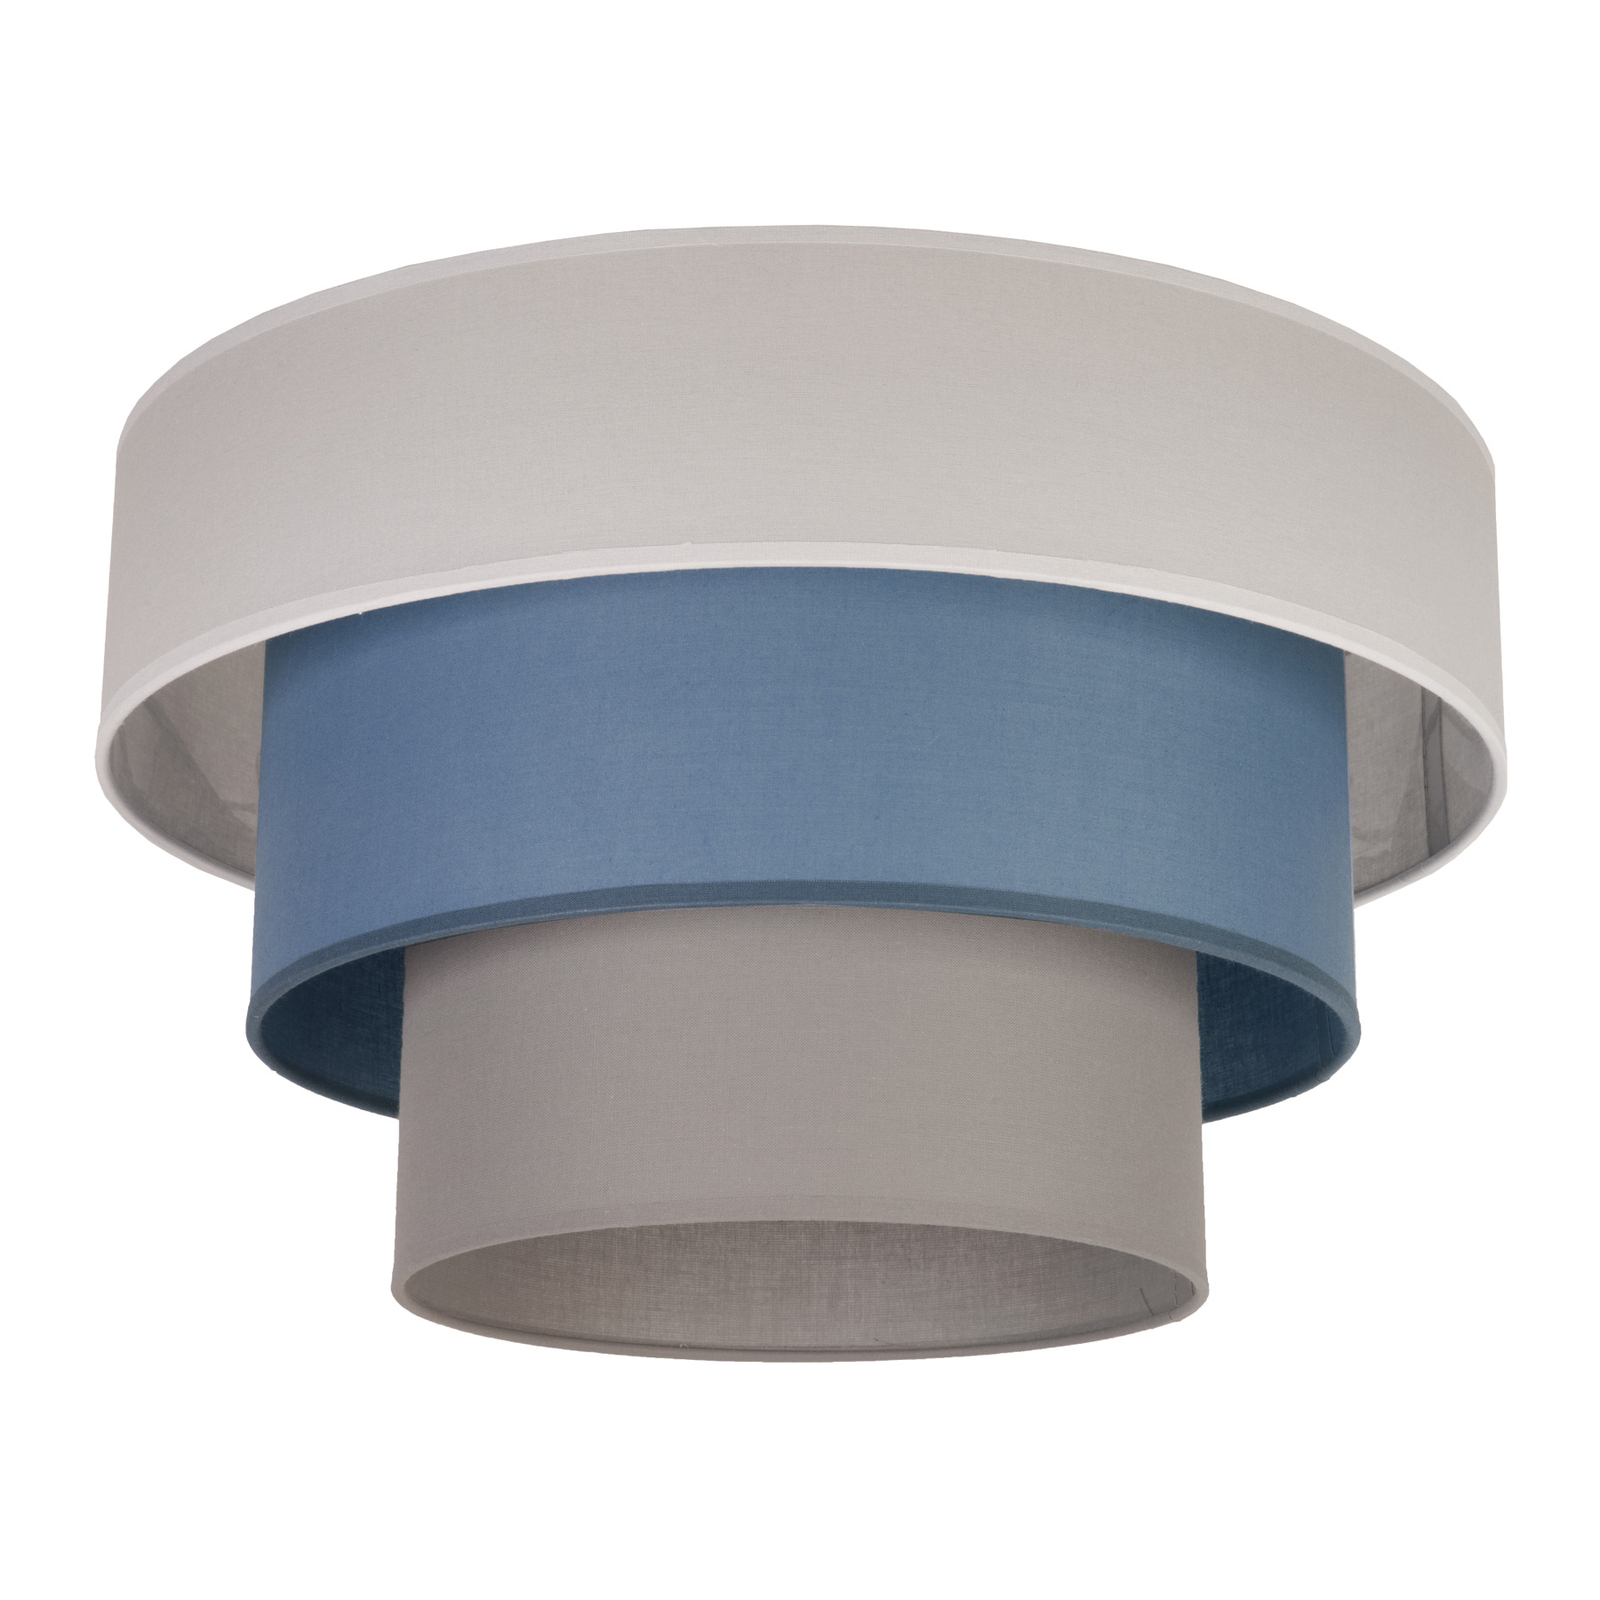 Luneta fabric ceiling light grey/navy blue Ø 60 cm